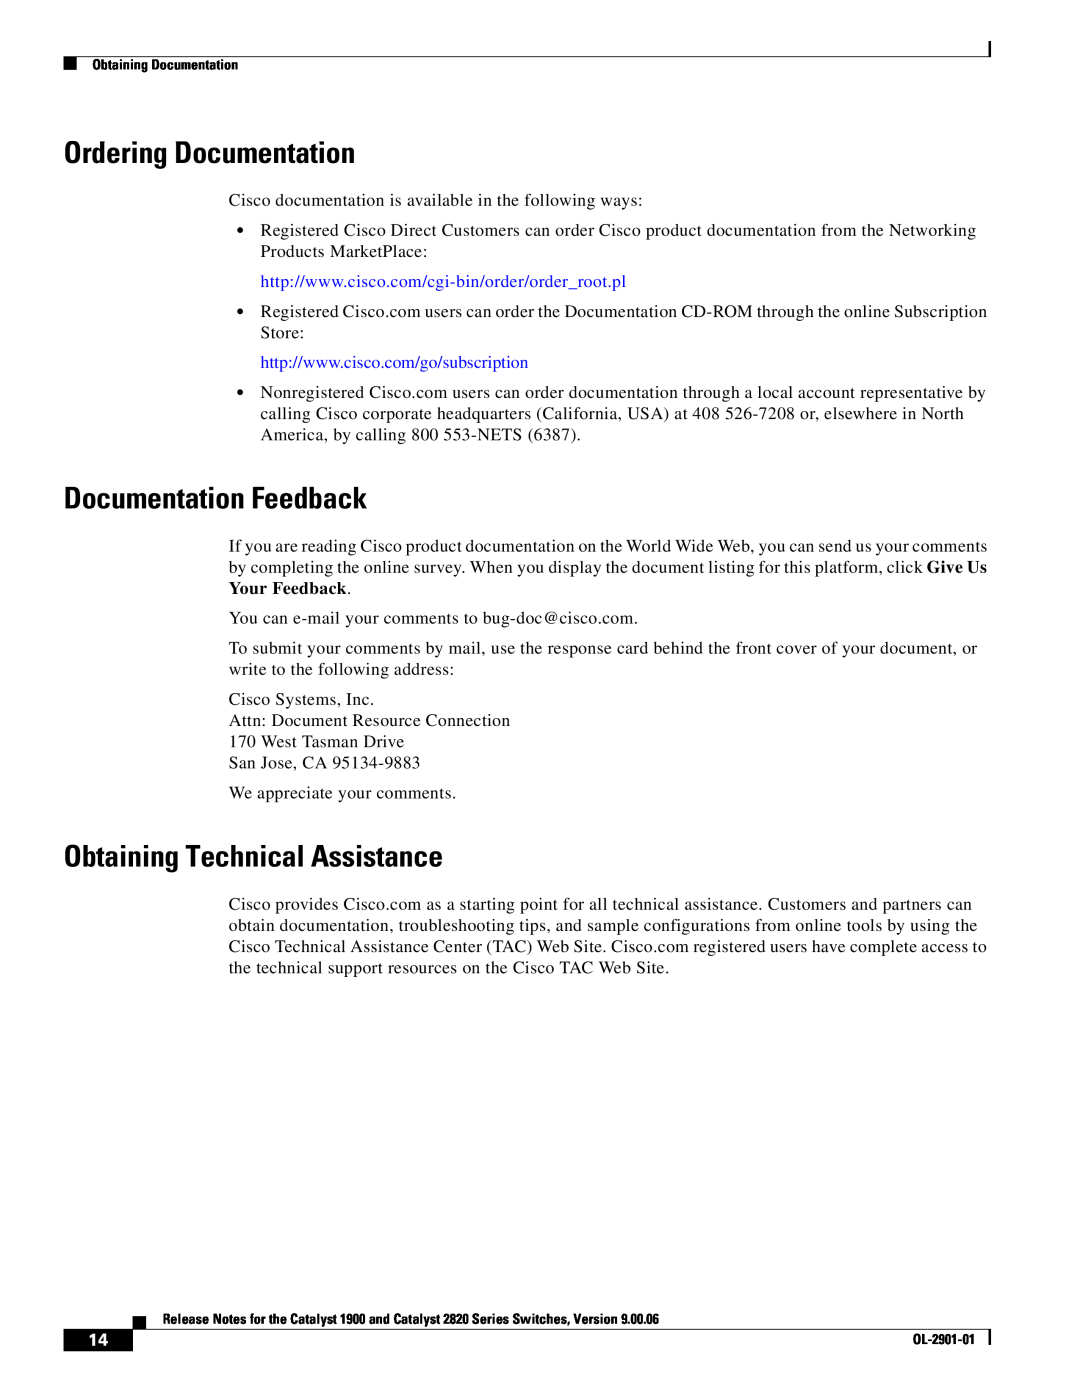 Cisco Systems 1900, 2820 manual Ordering Documentation, Documentation Feedback, Obtaining Technical Assistance 